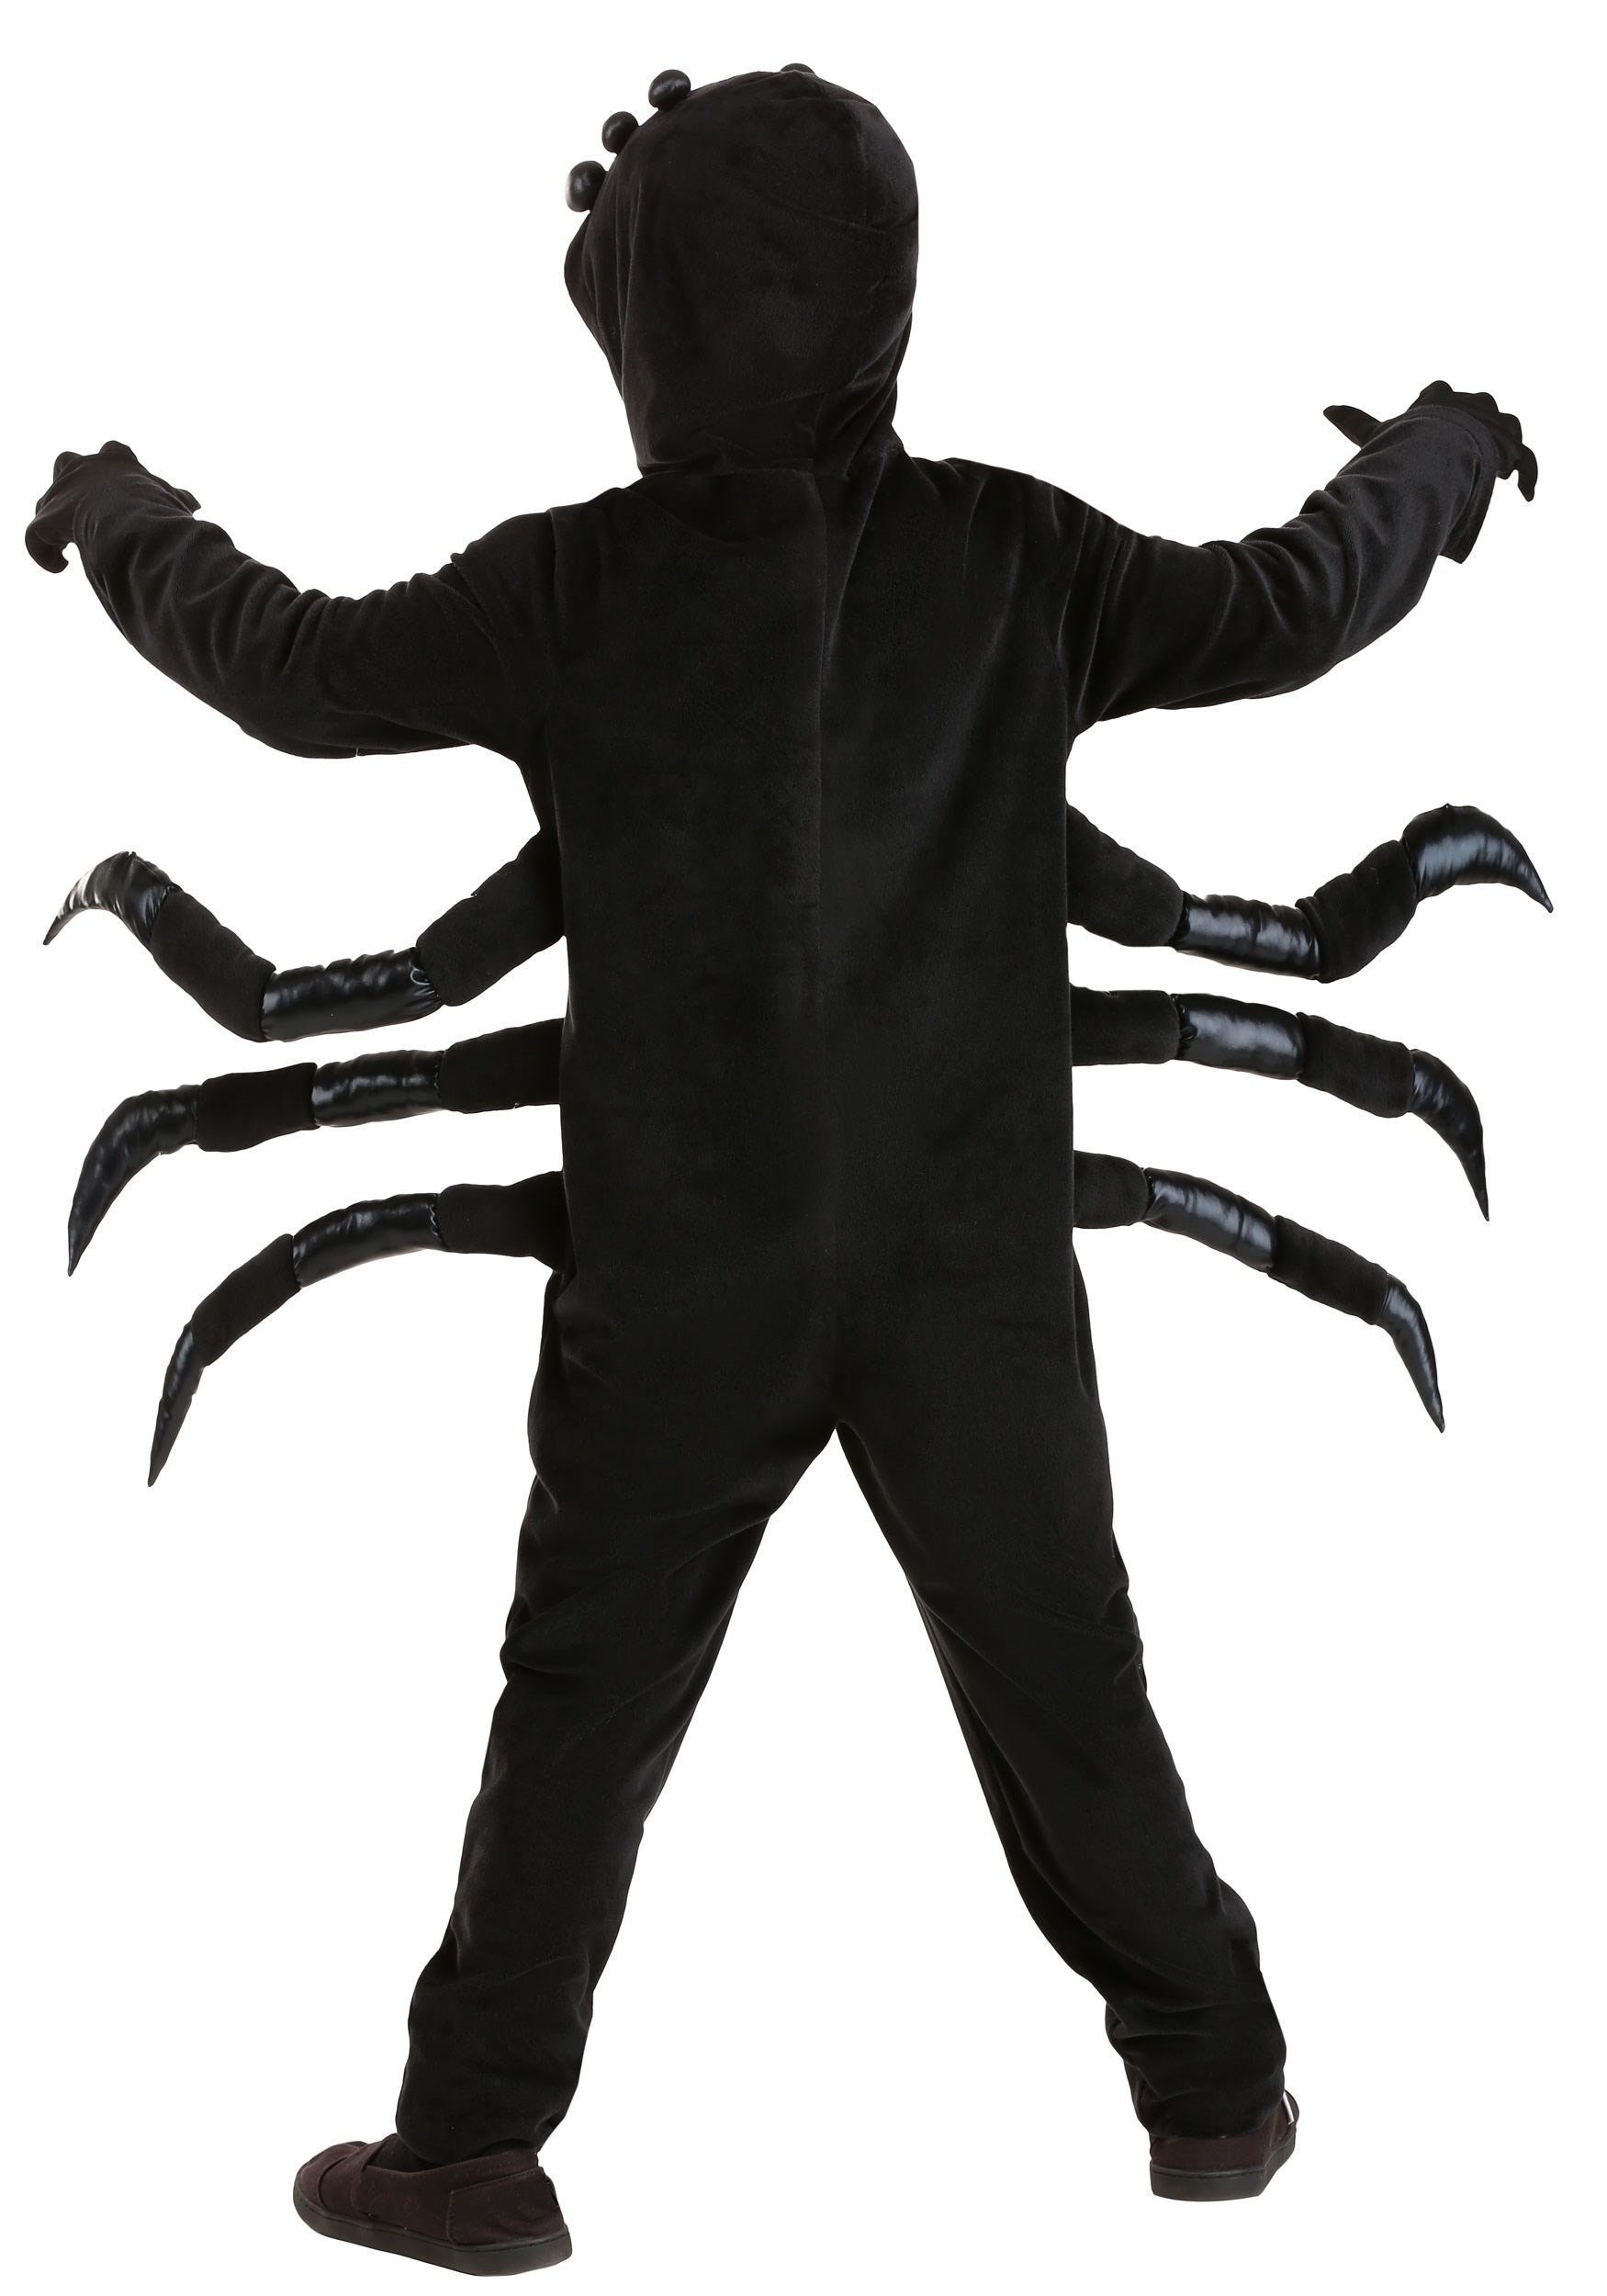 Child Cozy Black Spider Costume | Kid's Spider Halloween Costumes